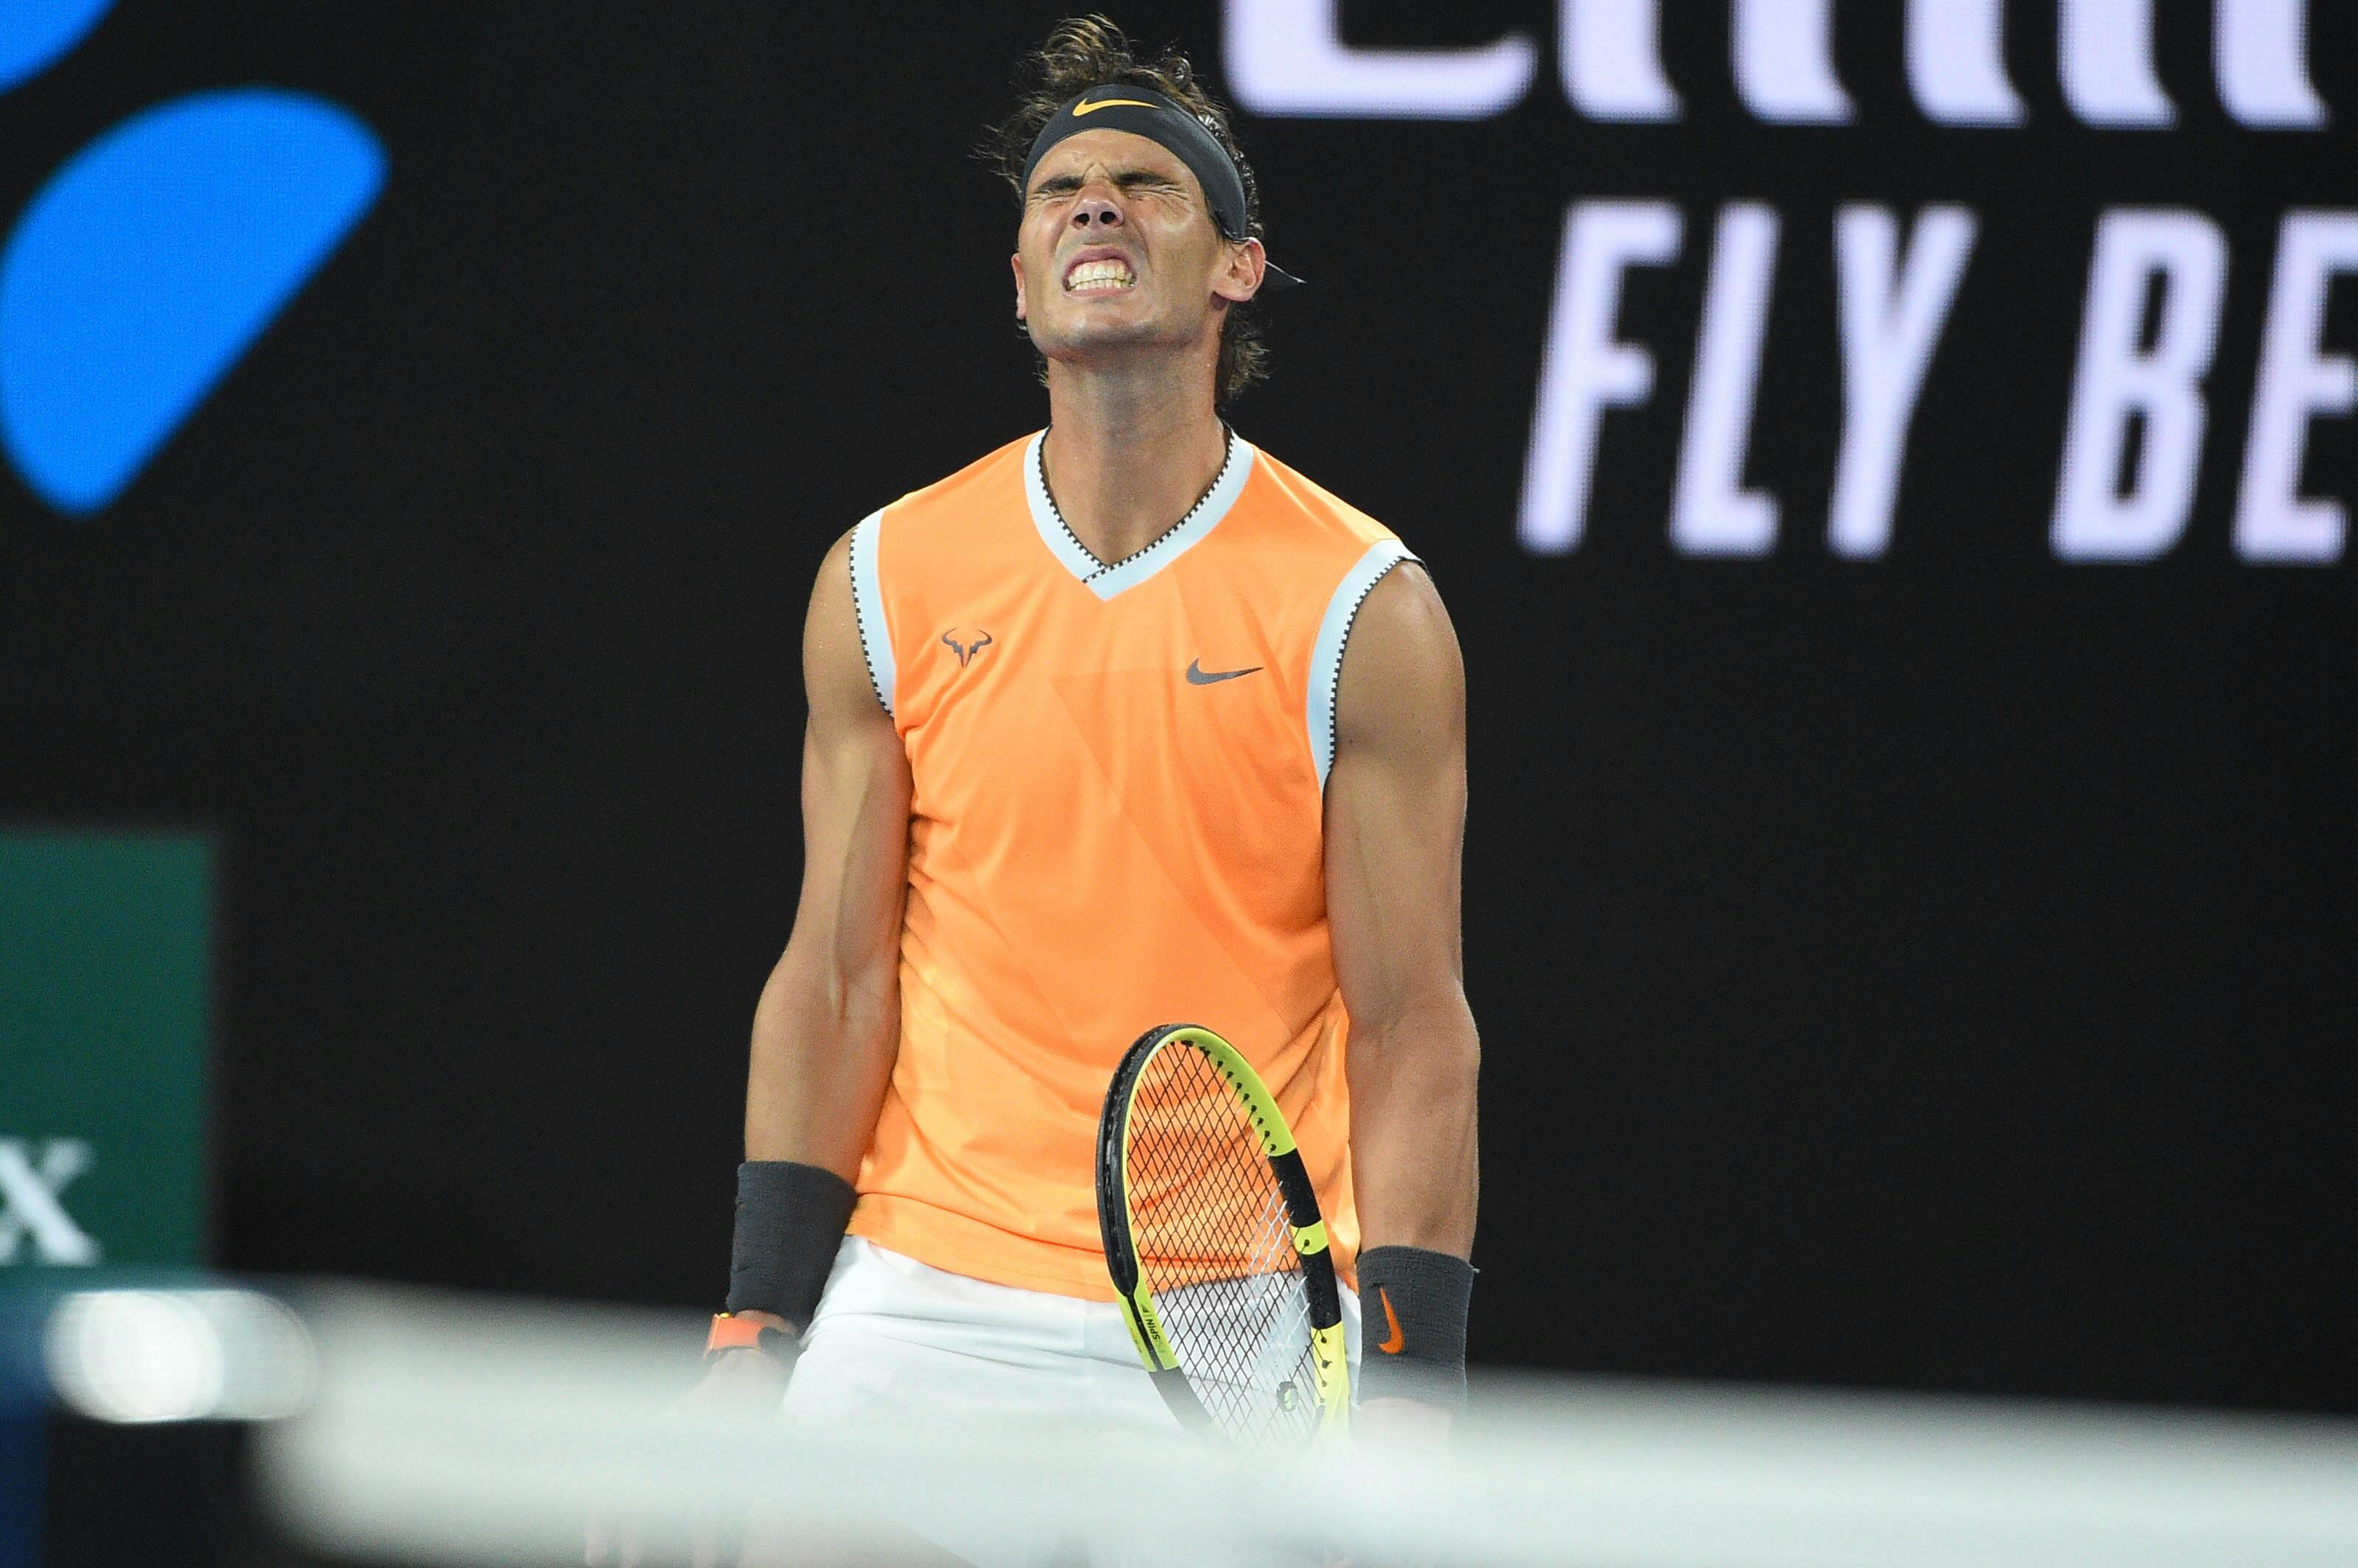 Rafael Nadal misses a ball at the 2019 Australian Open